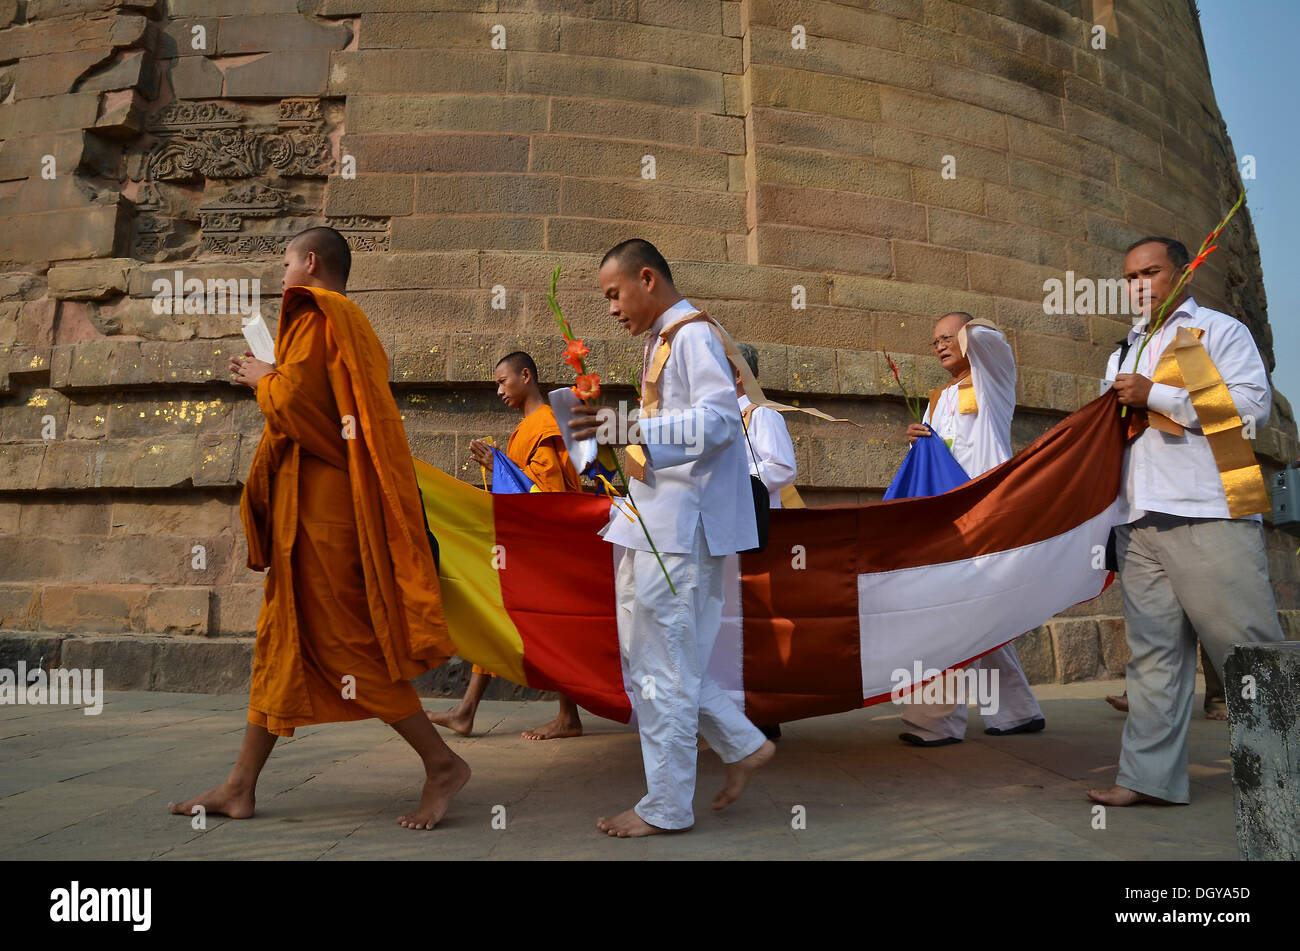 Buddhist nuns and monks, historical Buddhist pilgrimage site, Dhamekh Stupa, Game Park of Isipatana, Sarnath, Uttar Pradesh Stock Photo